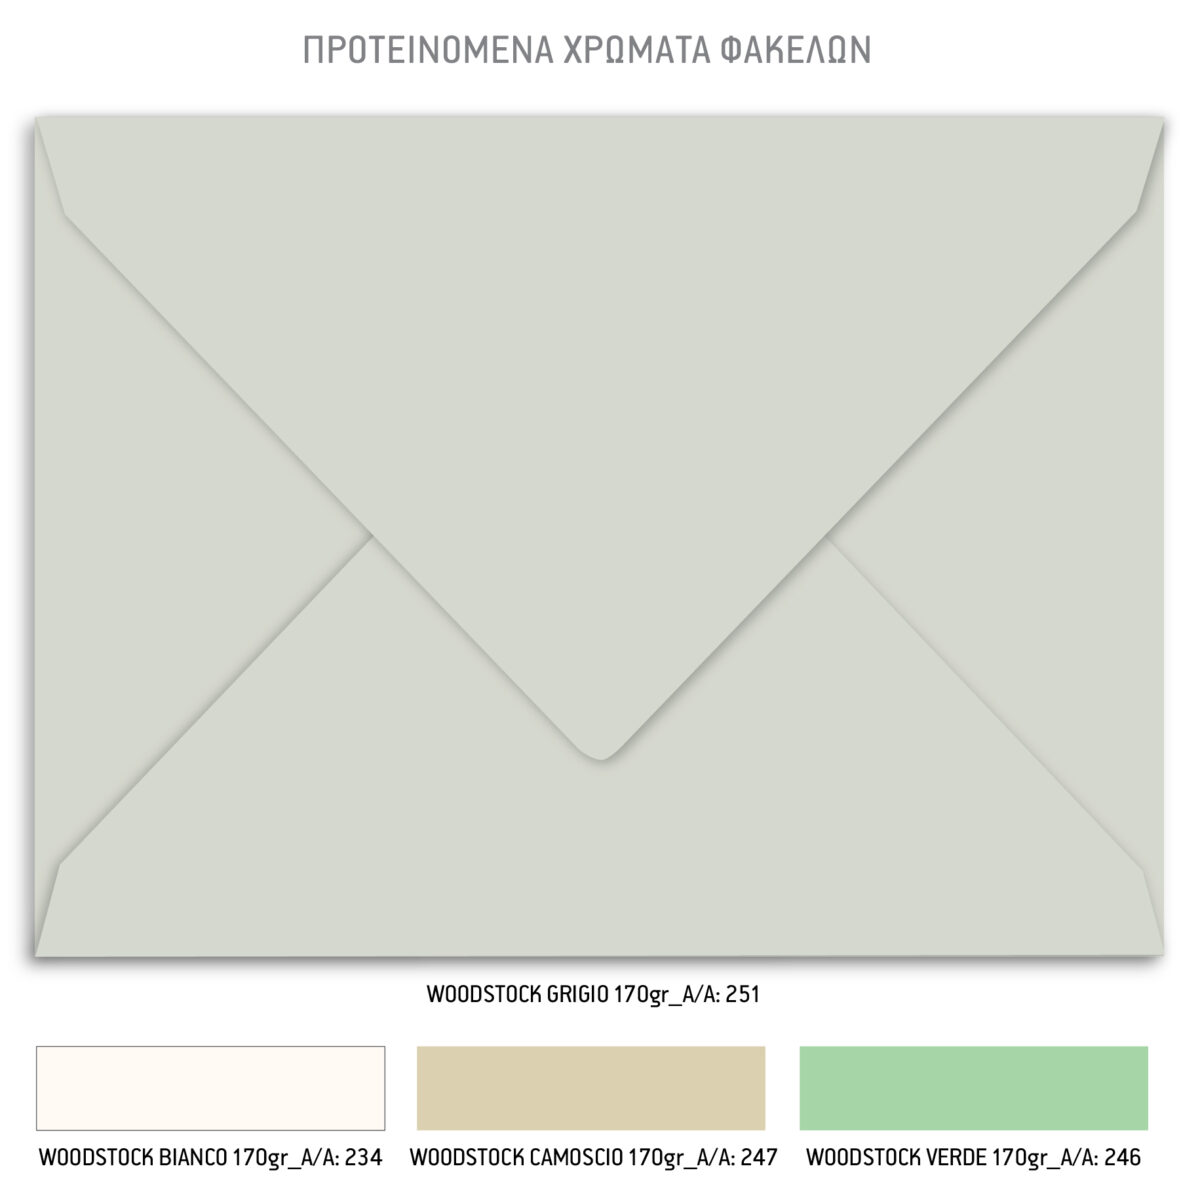 TS486 Νο91K 03 prosklitiria gamou vaptisis kladia green wreath minimal invitation wedding